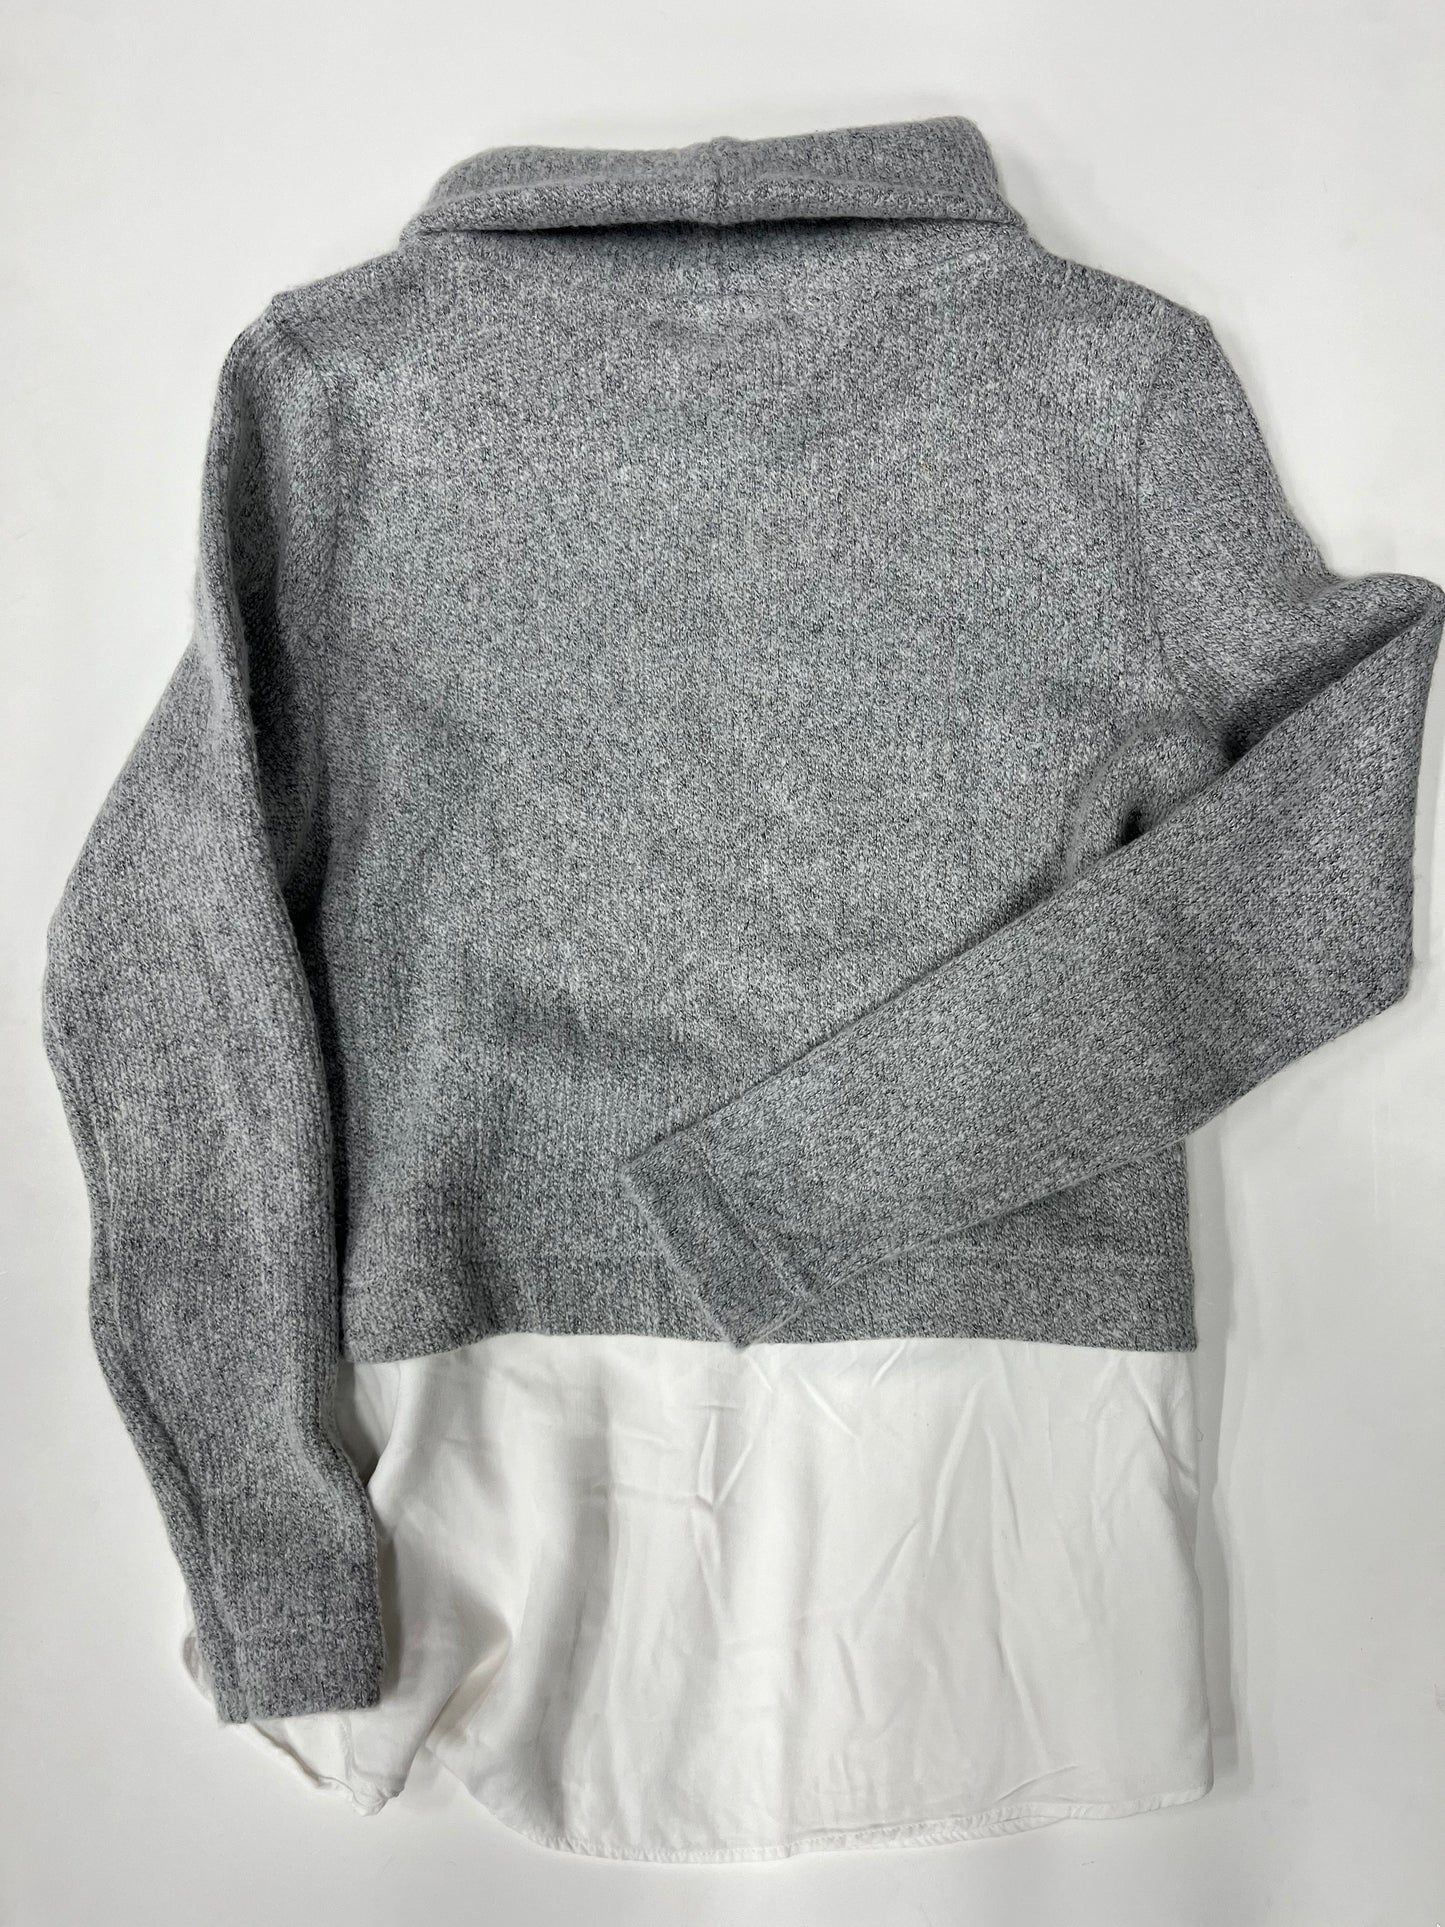 Loft Knit Scoop Neck Layered Sweater Grey Size XS